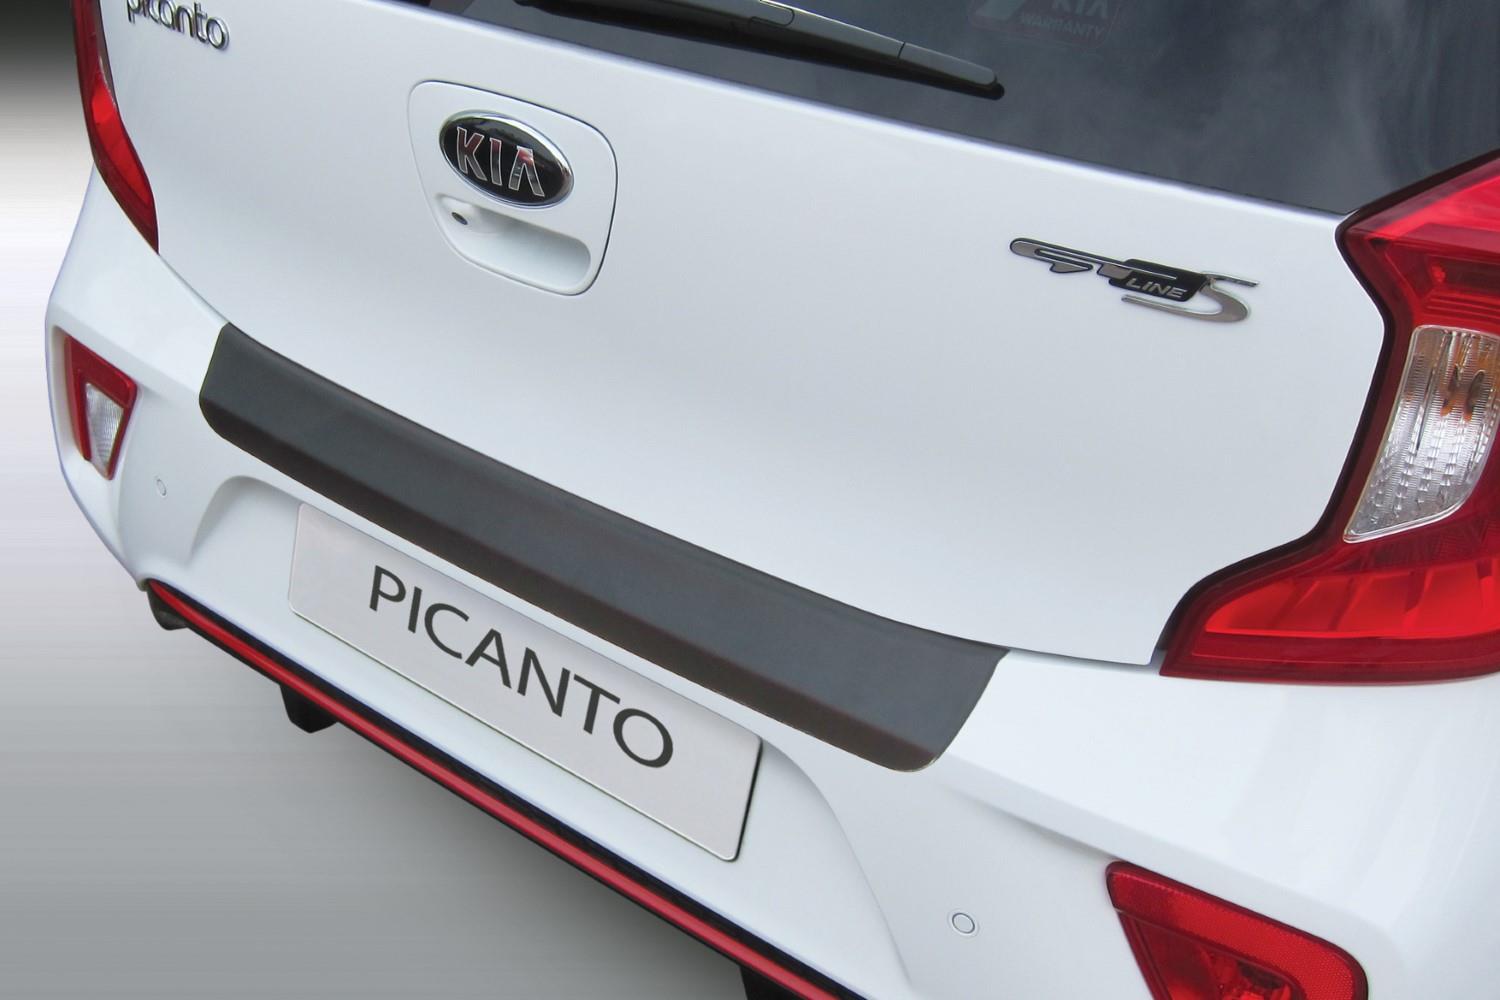 Kaufe Für Kia Picanto Armlehne Für Kia Picanto 3X-Line Auto Armlehne Box  Innen Details Retrofit Teile Auto Zubehör Lagerung Box